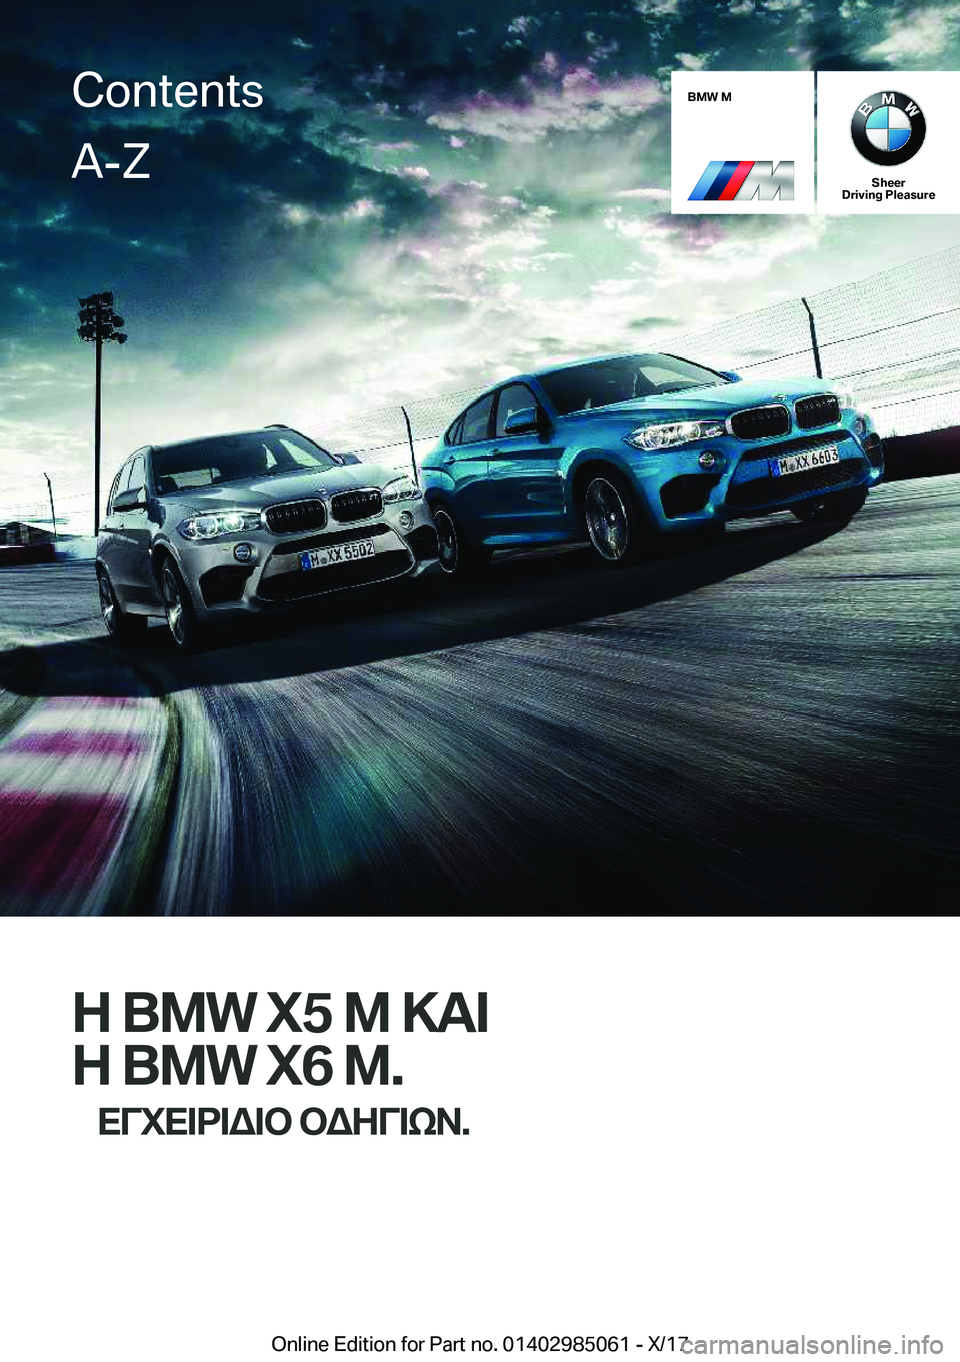 BMW X6 M 2018  ΟΔΗΓΌΣ ΧΡΉΣΗΣ (in Greek) �B�M�W��M
�S�h�e�e�r
�D�r�i�v�i�n�g��P�l�e�a�s�u�r�e
;��B�M�W��X�5��M�>T=
;��B�M�W��X�6��M�. XViX=d=W=b�bW;V=kA�.
�C�o�n�t�e�n�t�s�A�-�Z
�O�n�l�i�n�e� �E�d�i�t�i�o�n� �